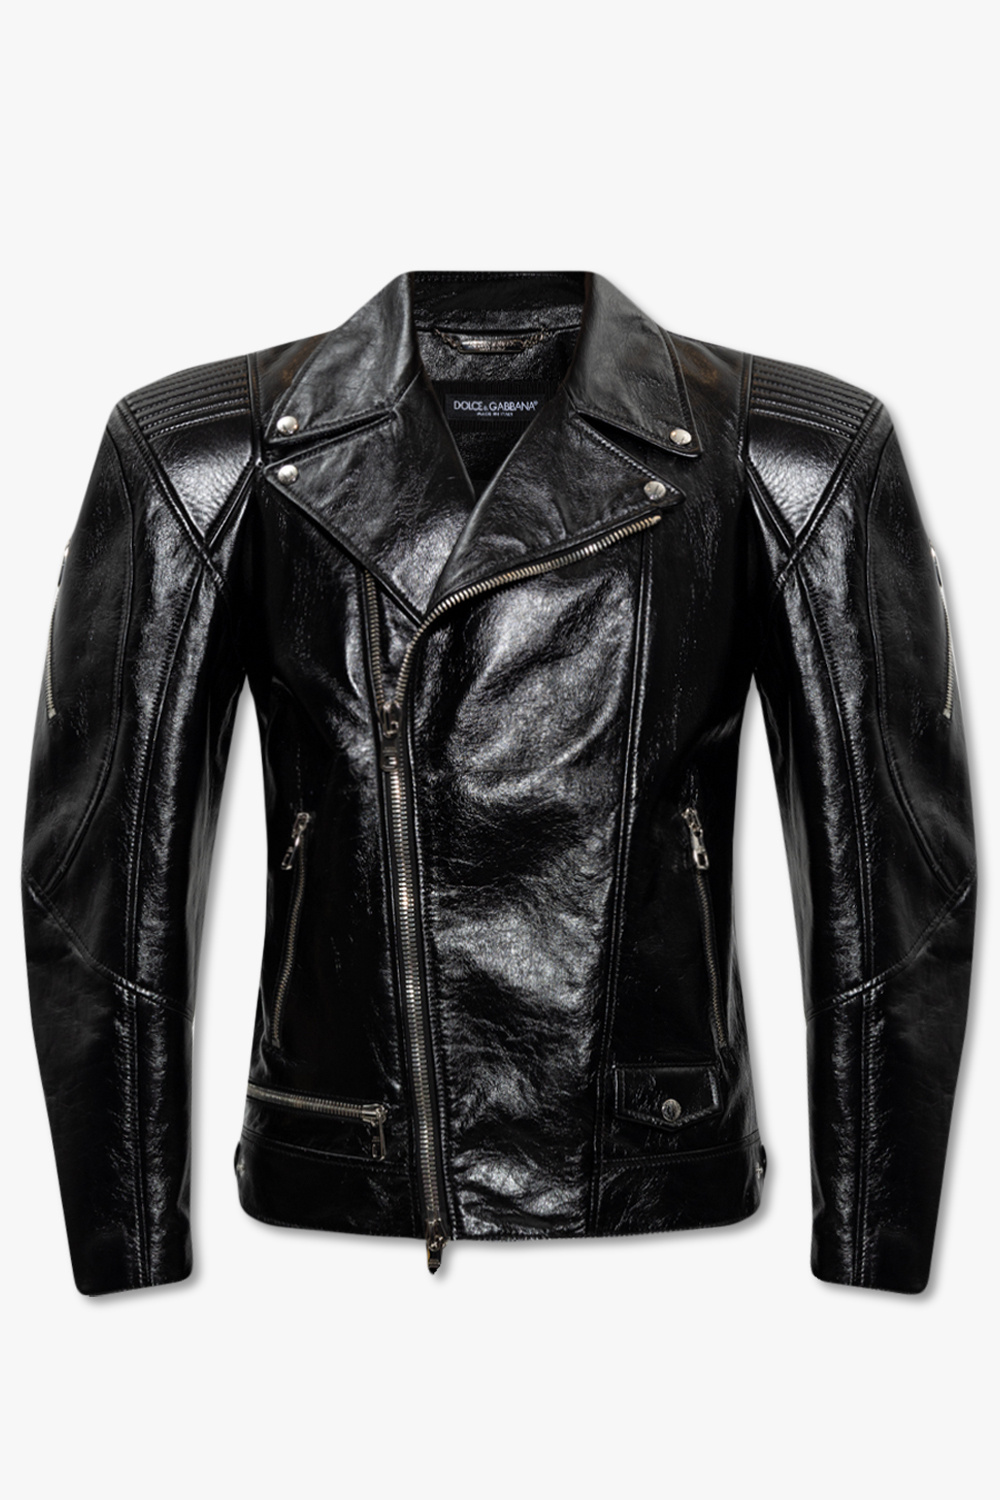 Dolce & Gabbana Biker jacket